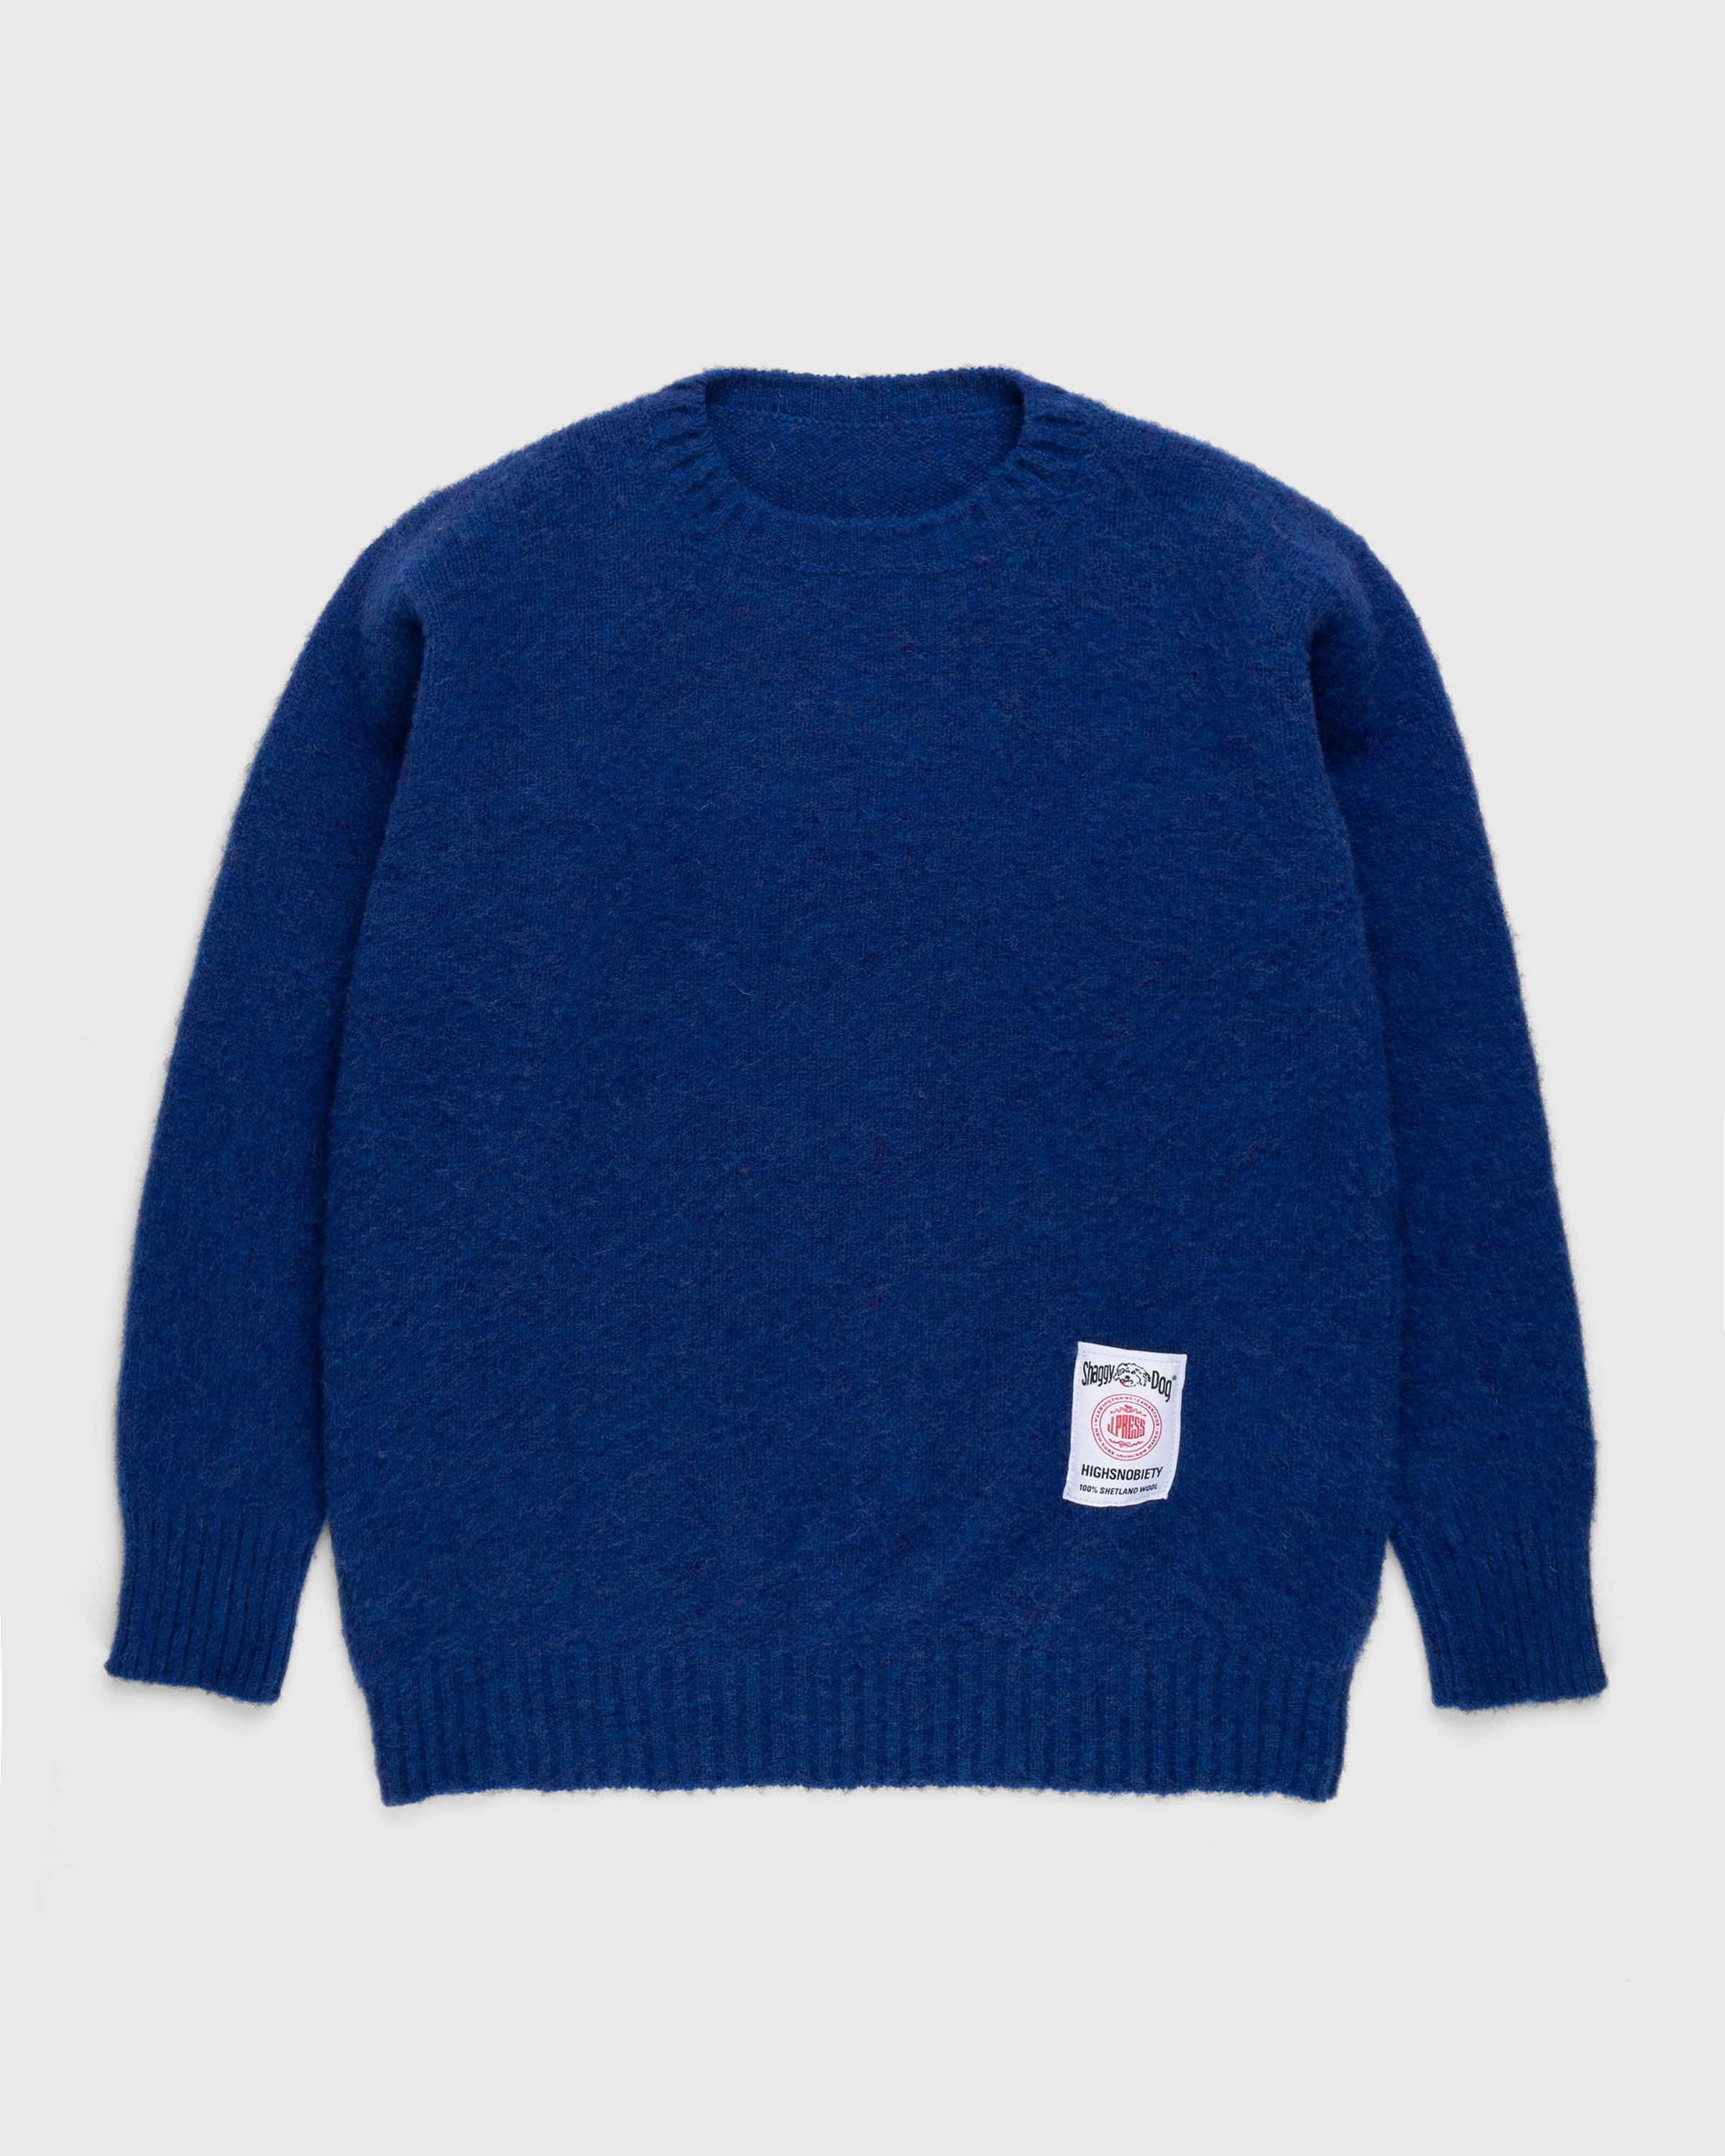 J. Press x Highsnobiety - Shaggy Dog Solid Sweater Blue - Clothing - Blue - Image 1